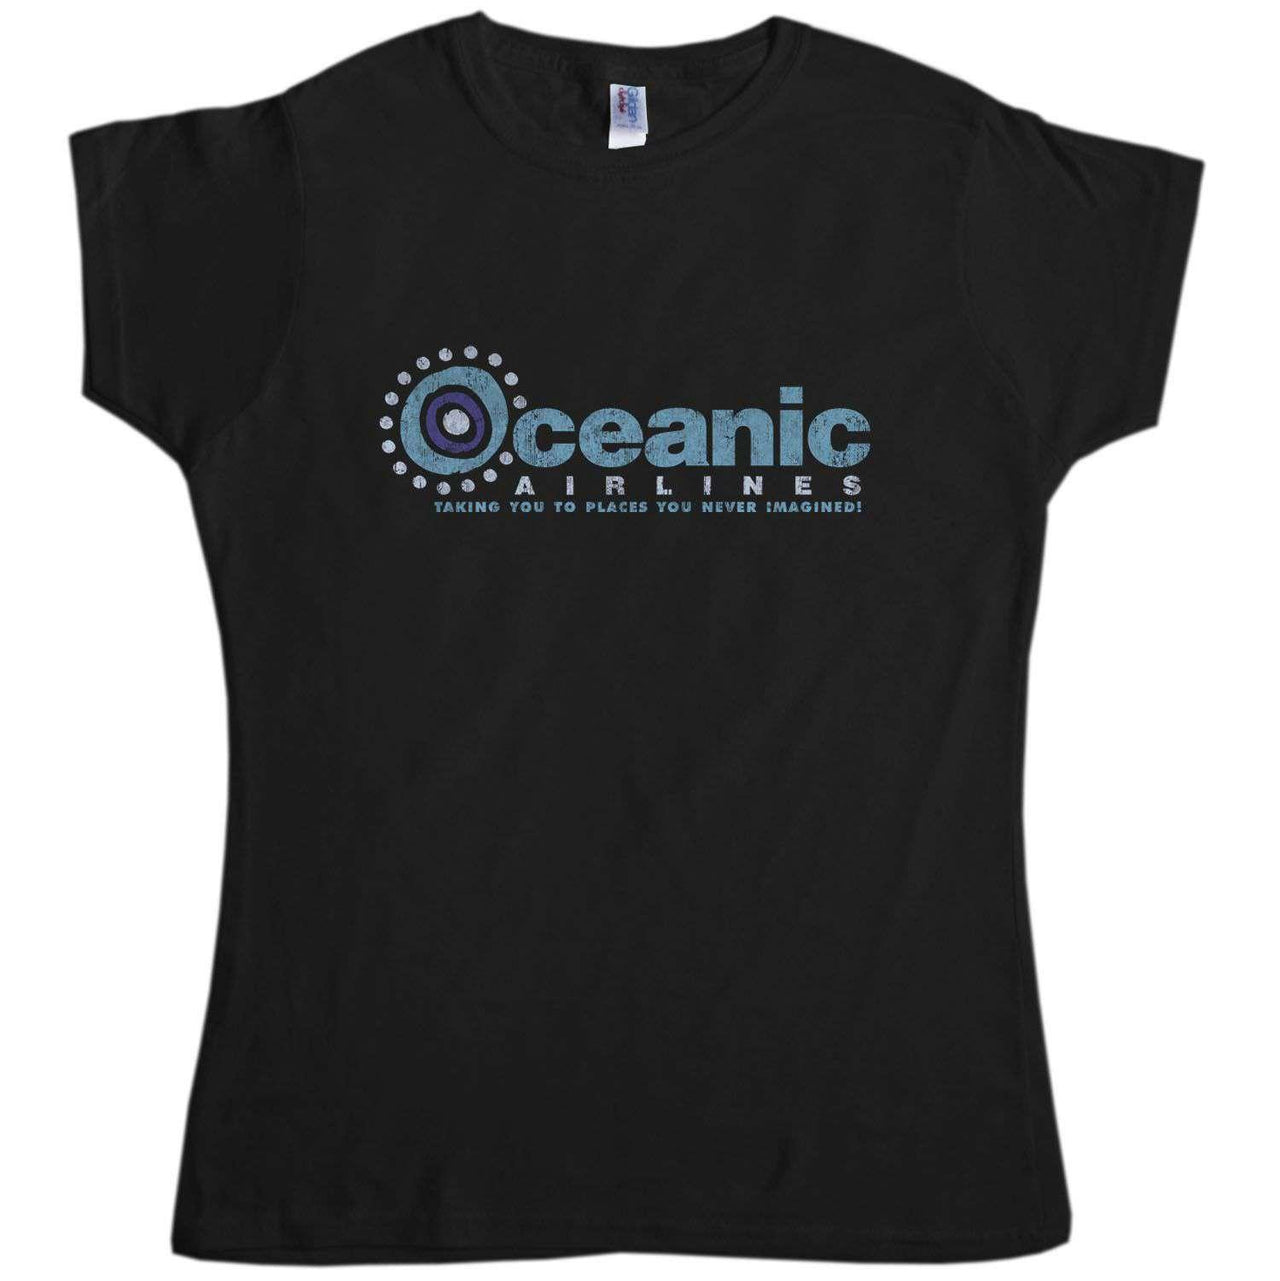 Oceanic Airlines T-Shirt for Women 8Ball